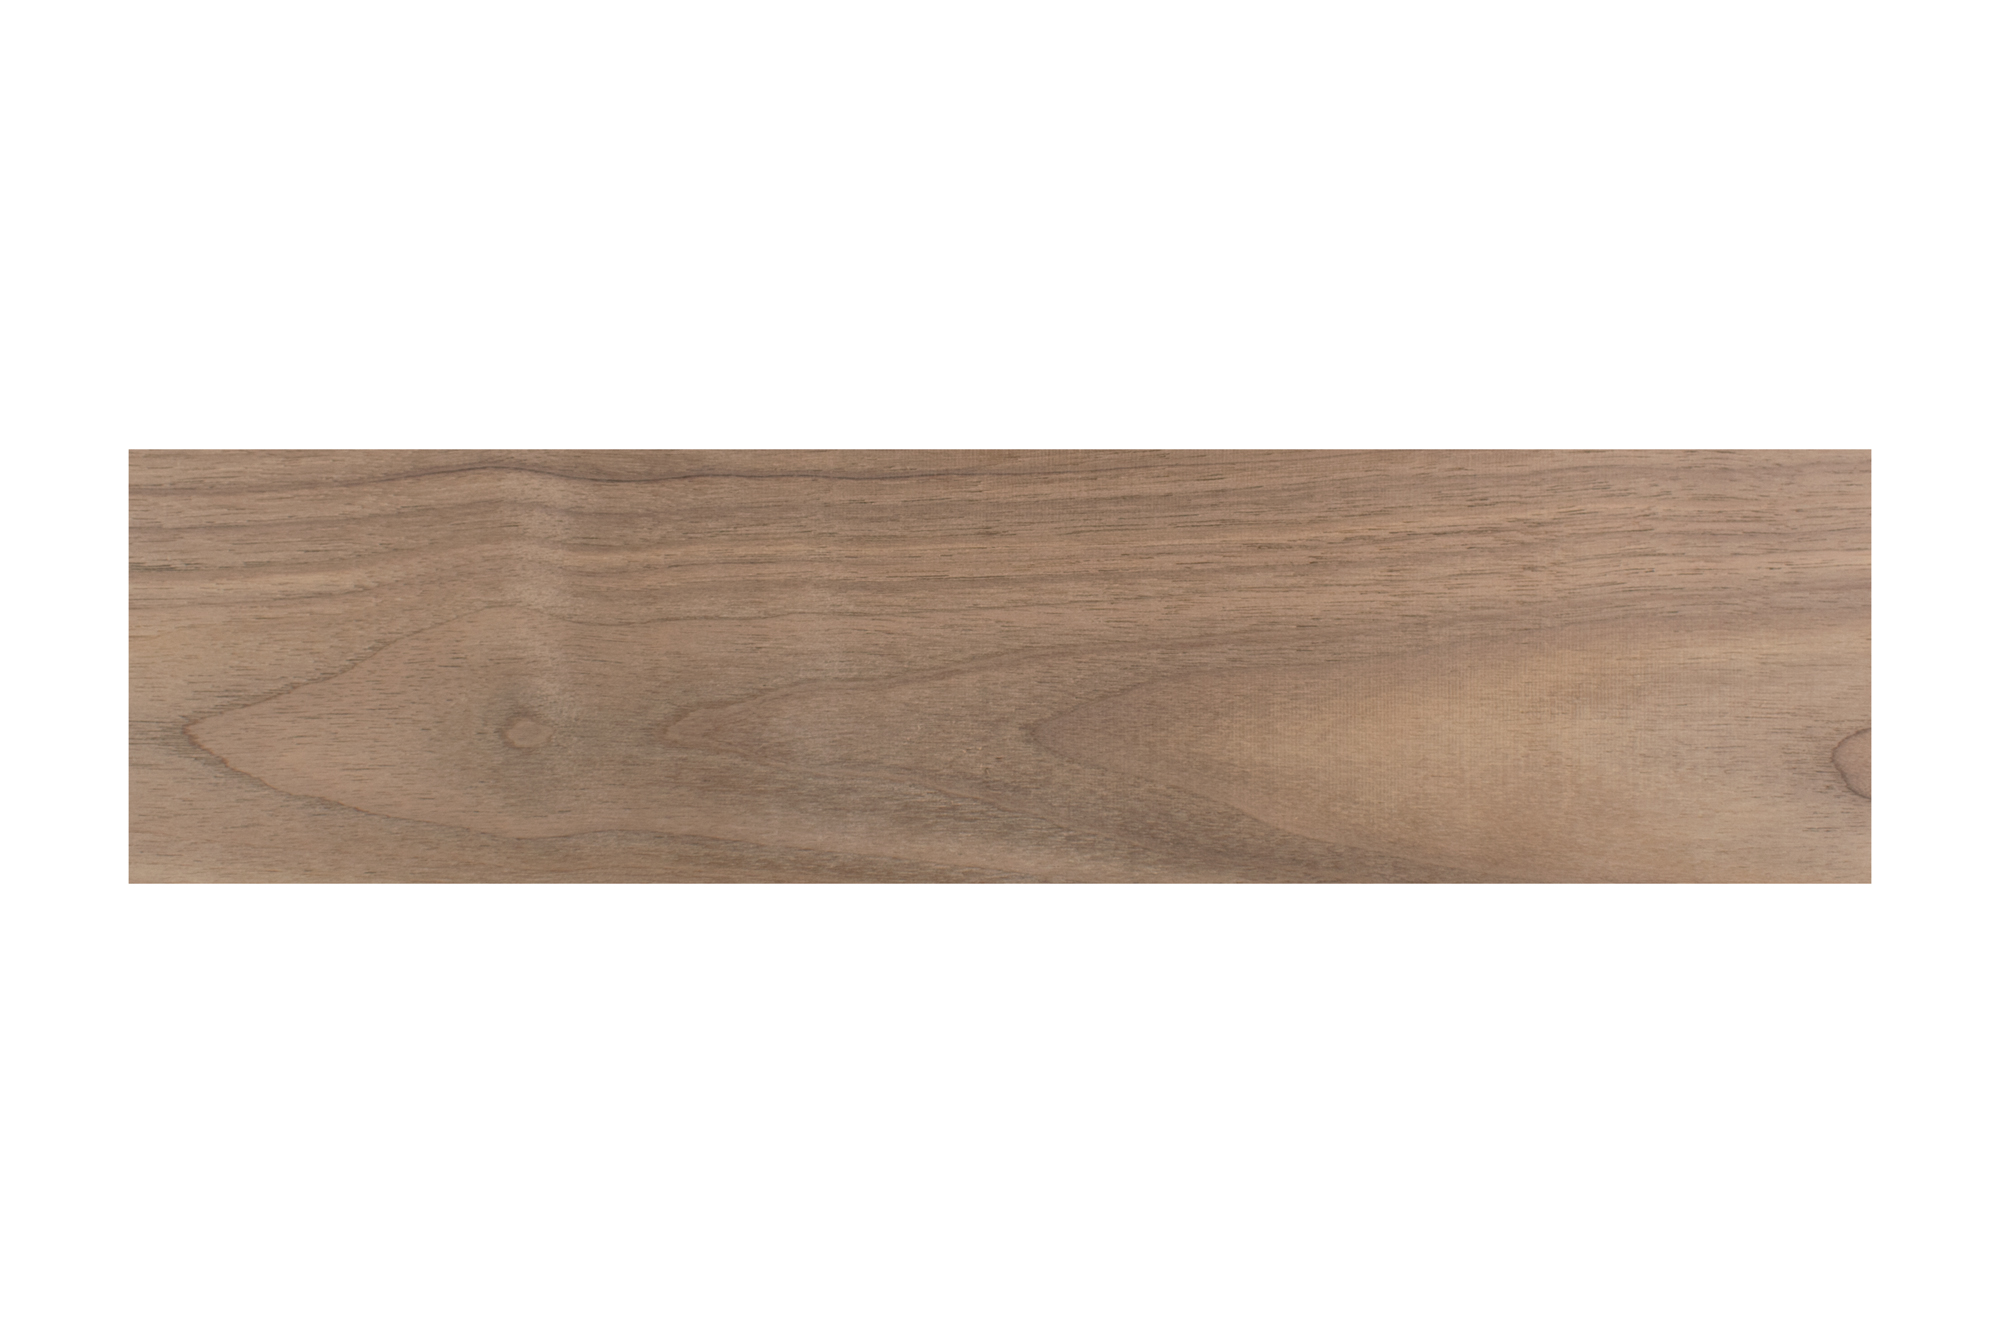 Walnut Small Wood craft board 1/4 inch thick